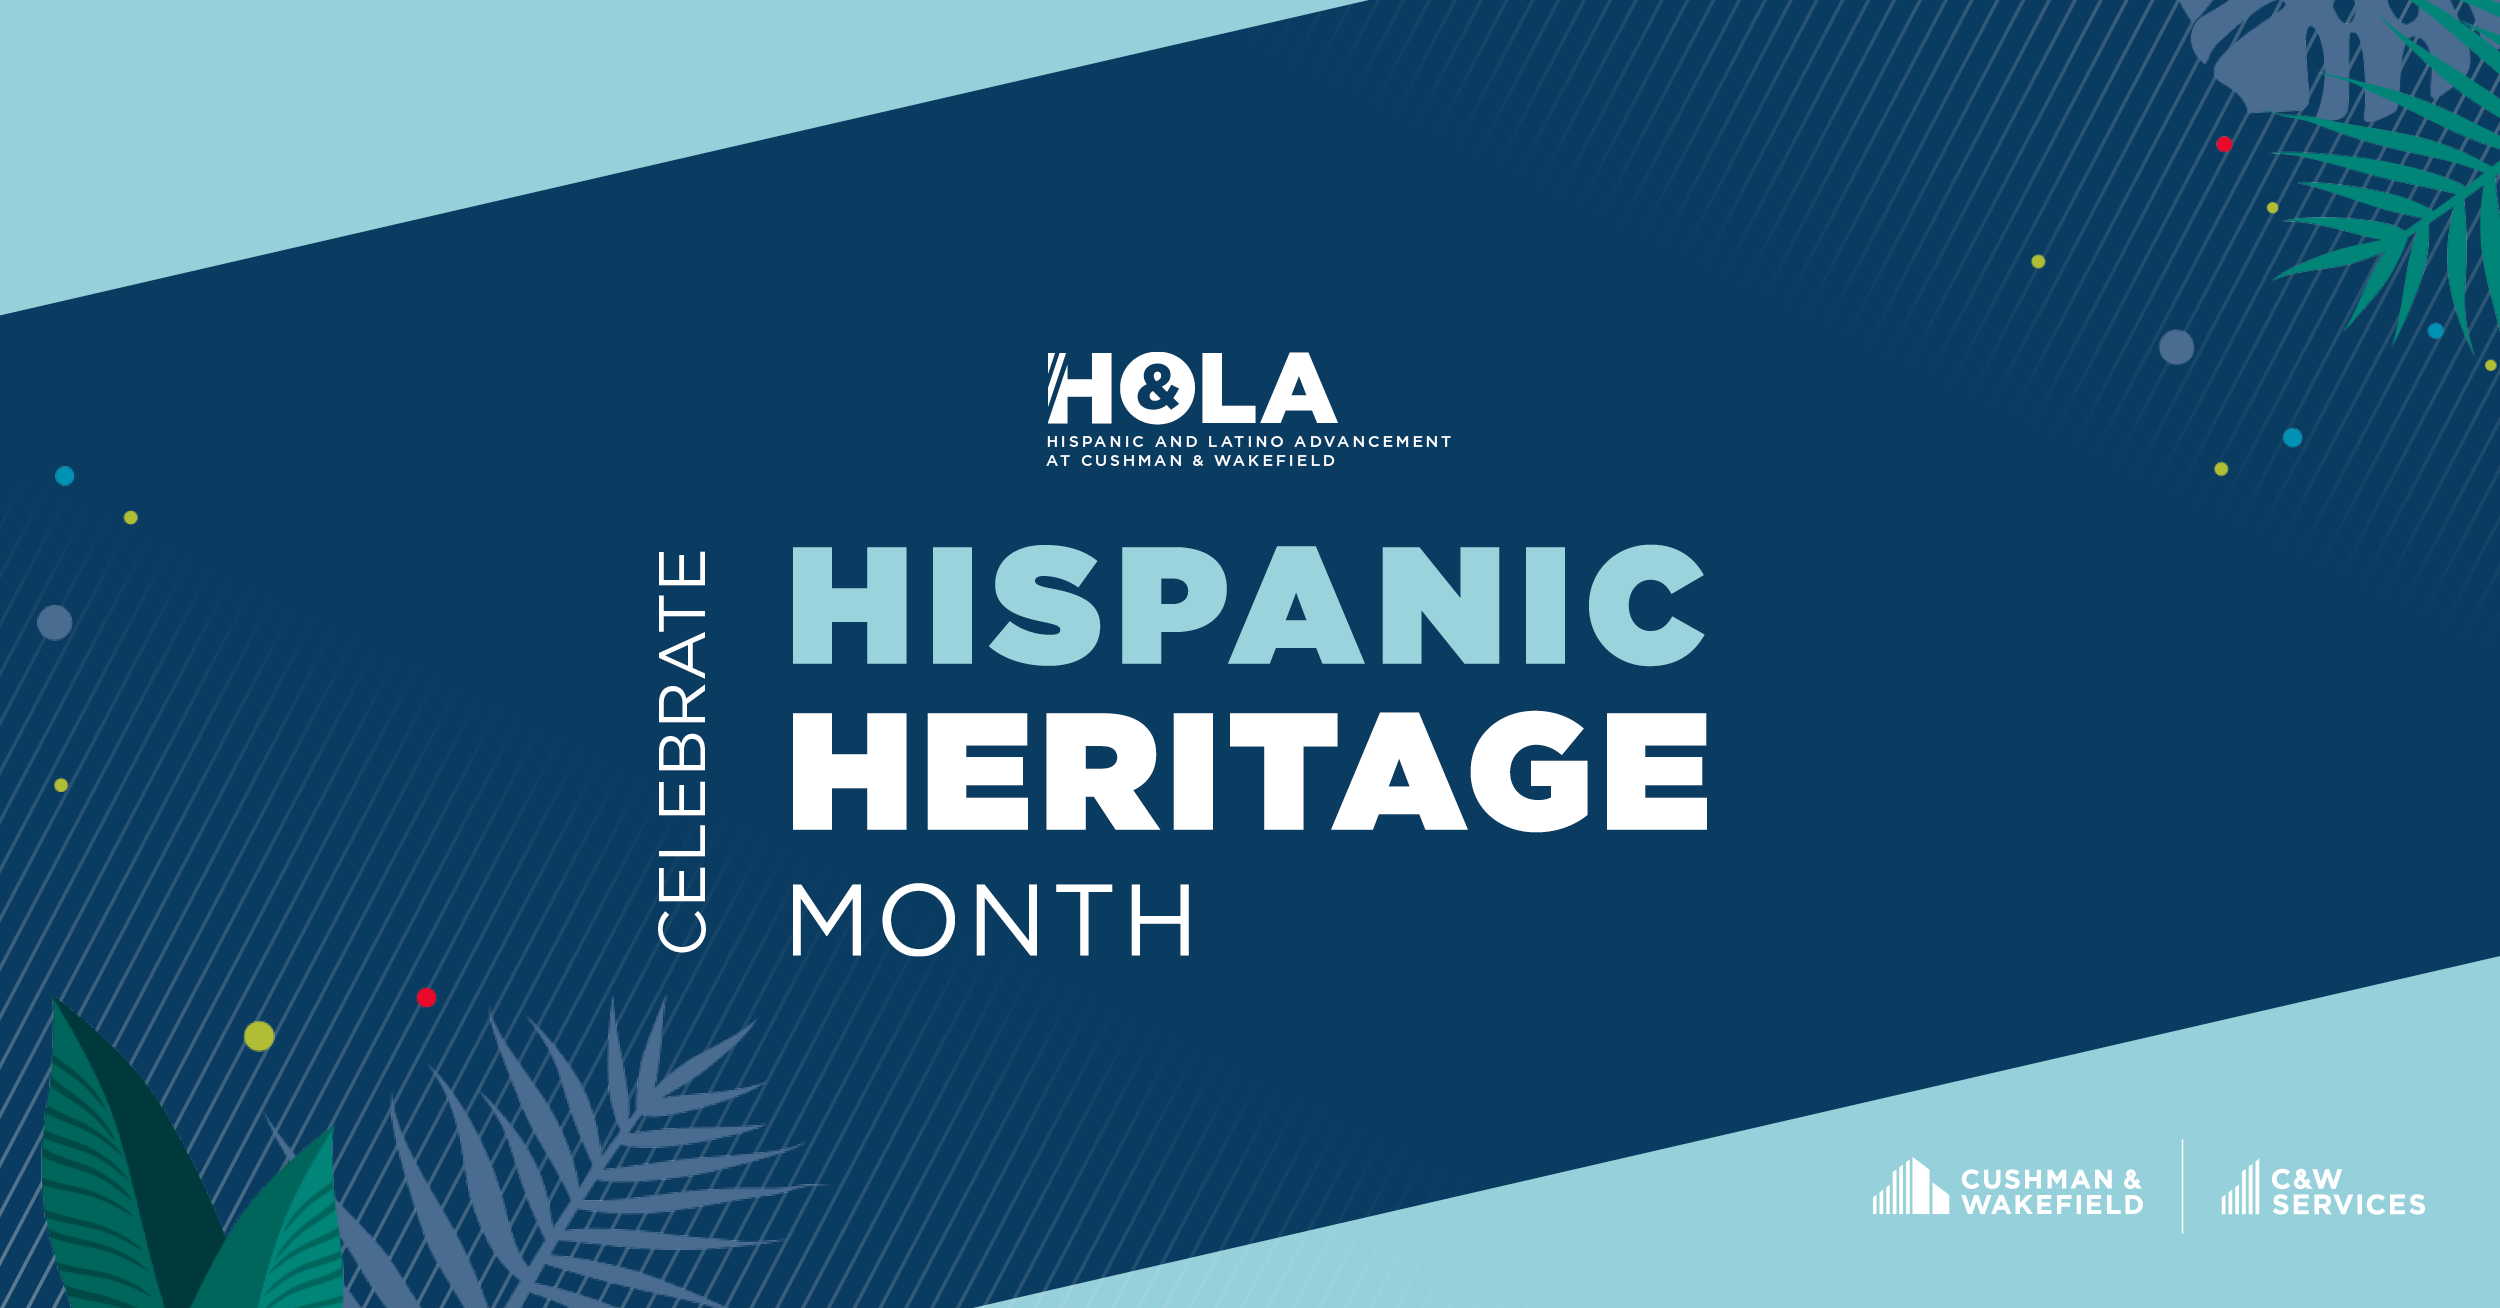 Banner with text "HOLA (Hispanic & Latino Advancement) at Cushman & Wakefield celebrates Hispanic Heritage Month"